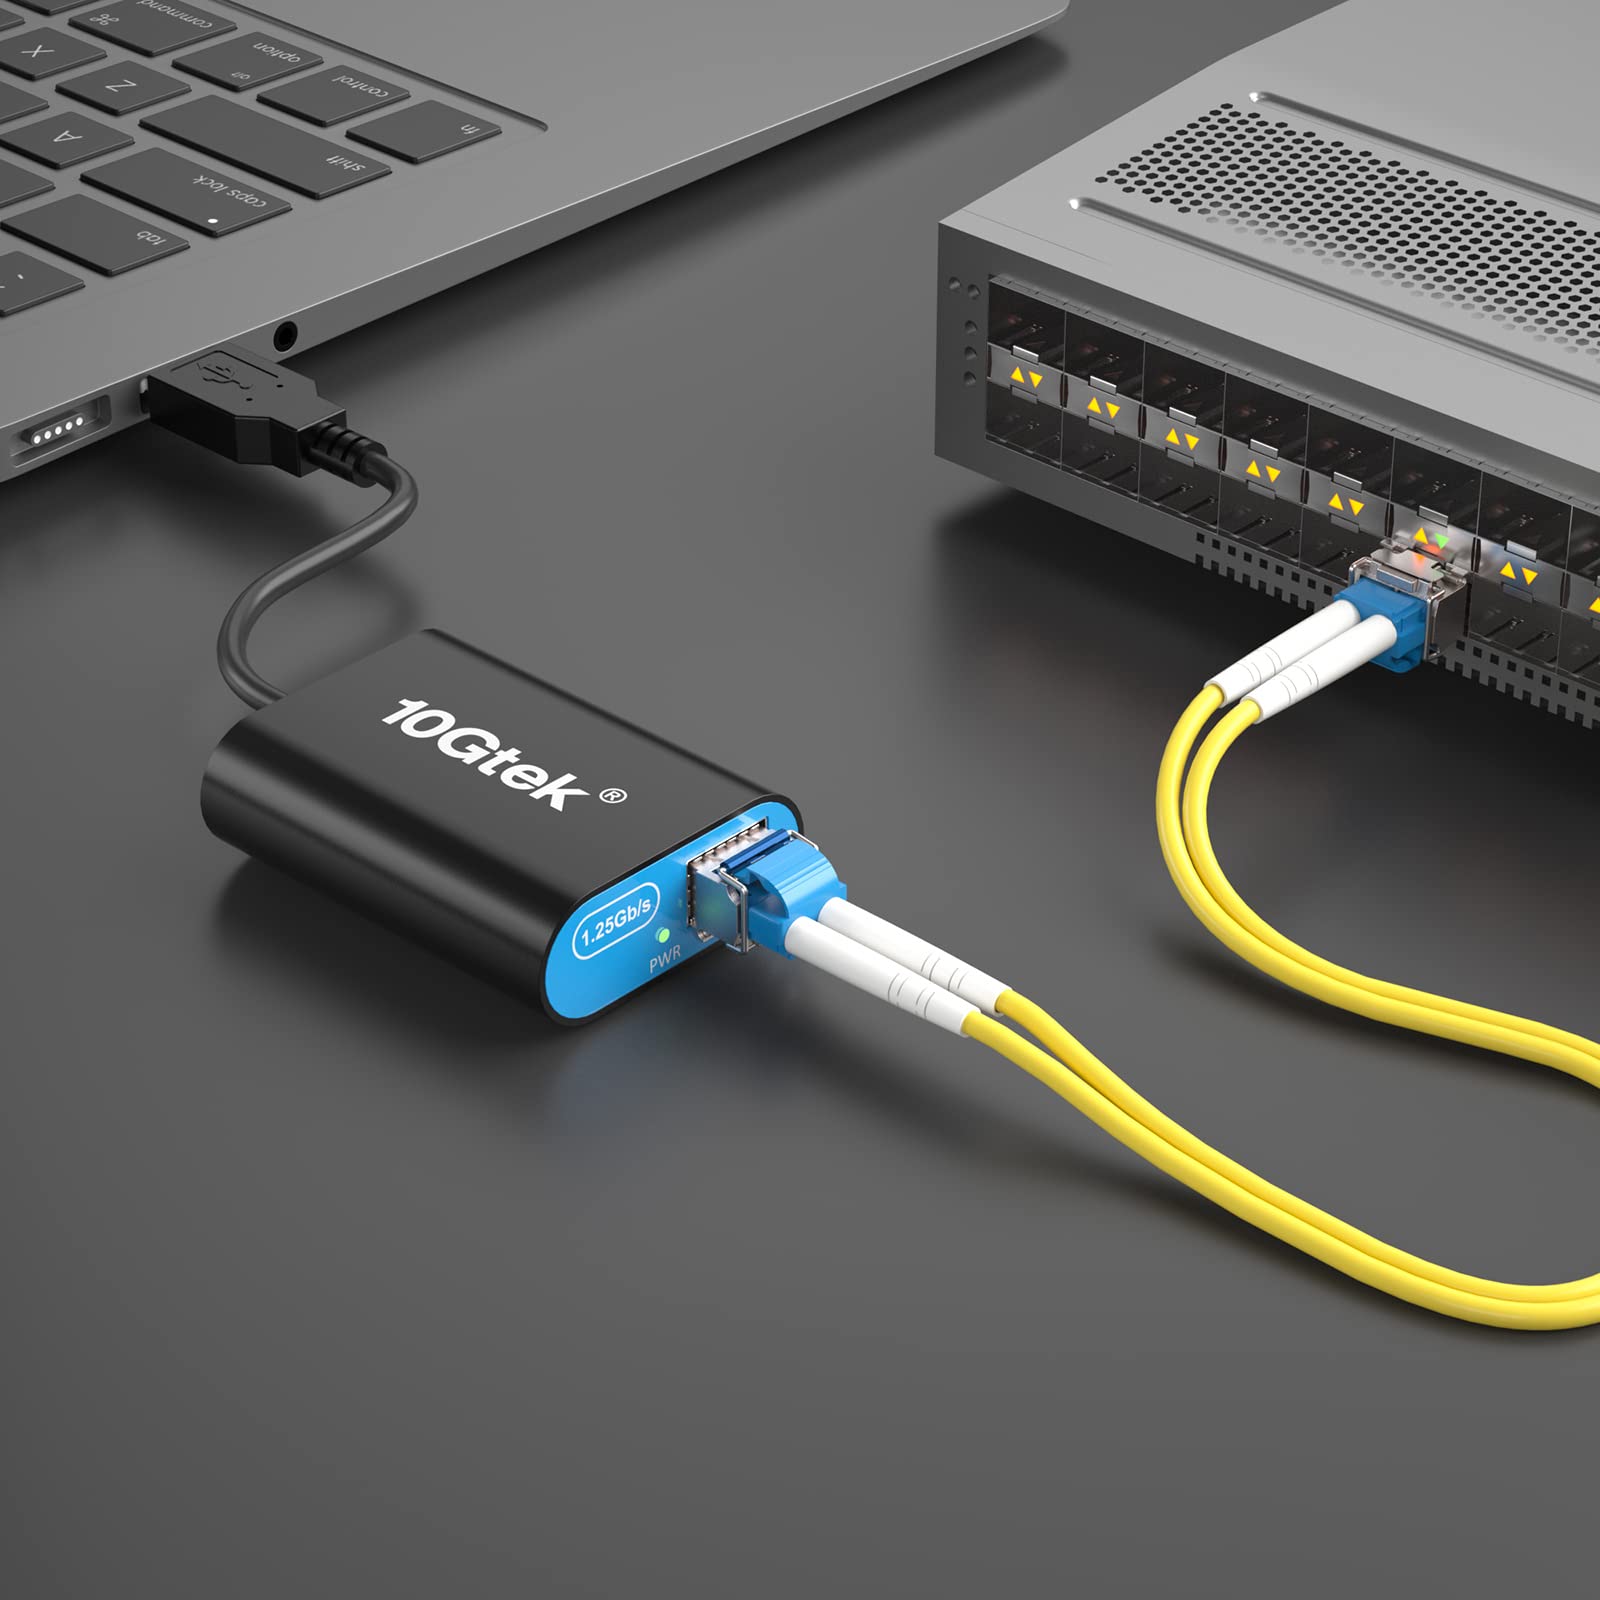 Alwong USB3.0 to SFP 1000Mbps Gigabit Ethernet Adapter